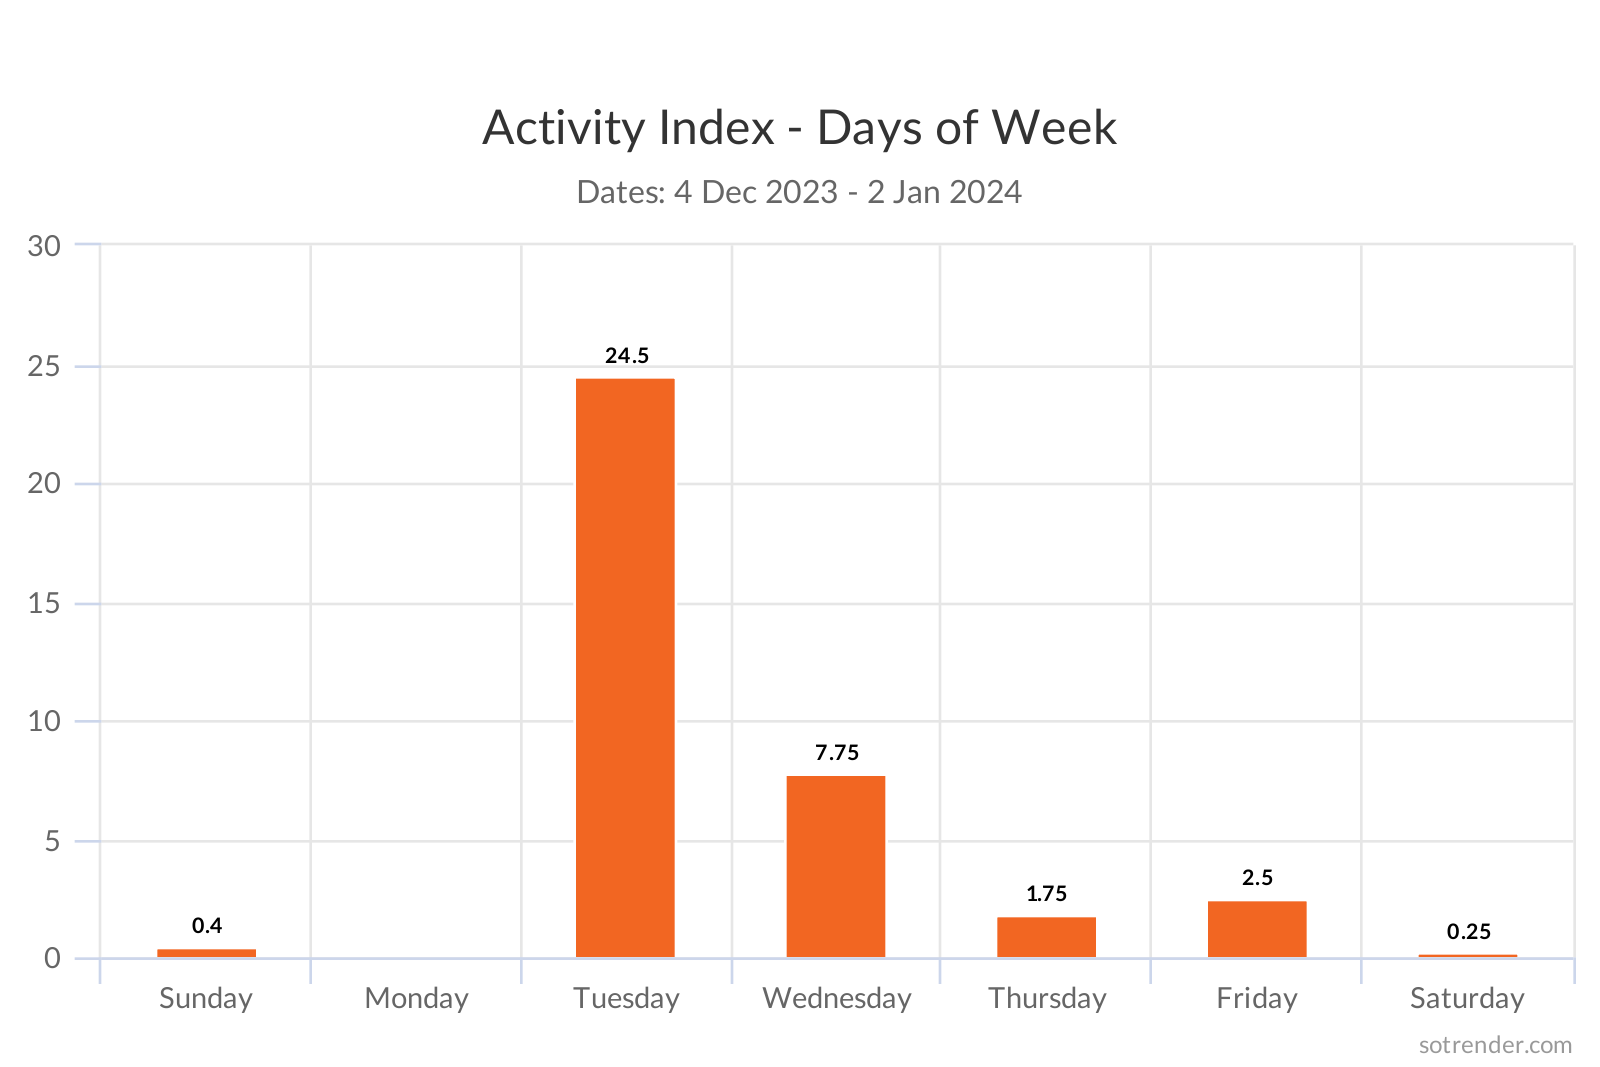 activity index by weekdays